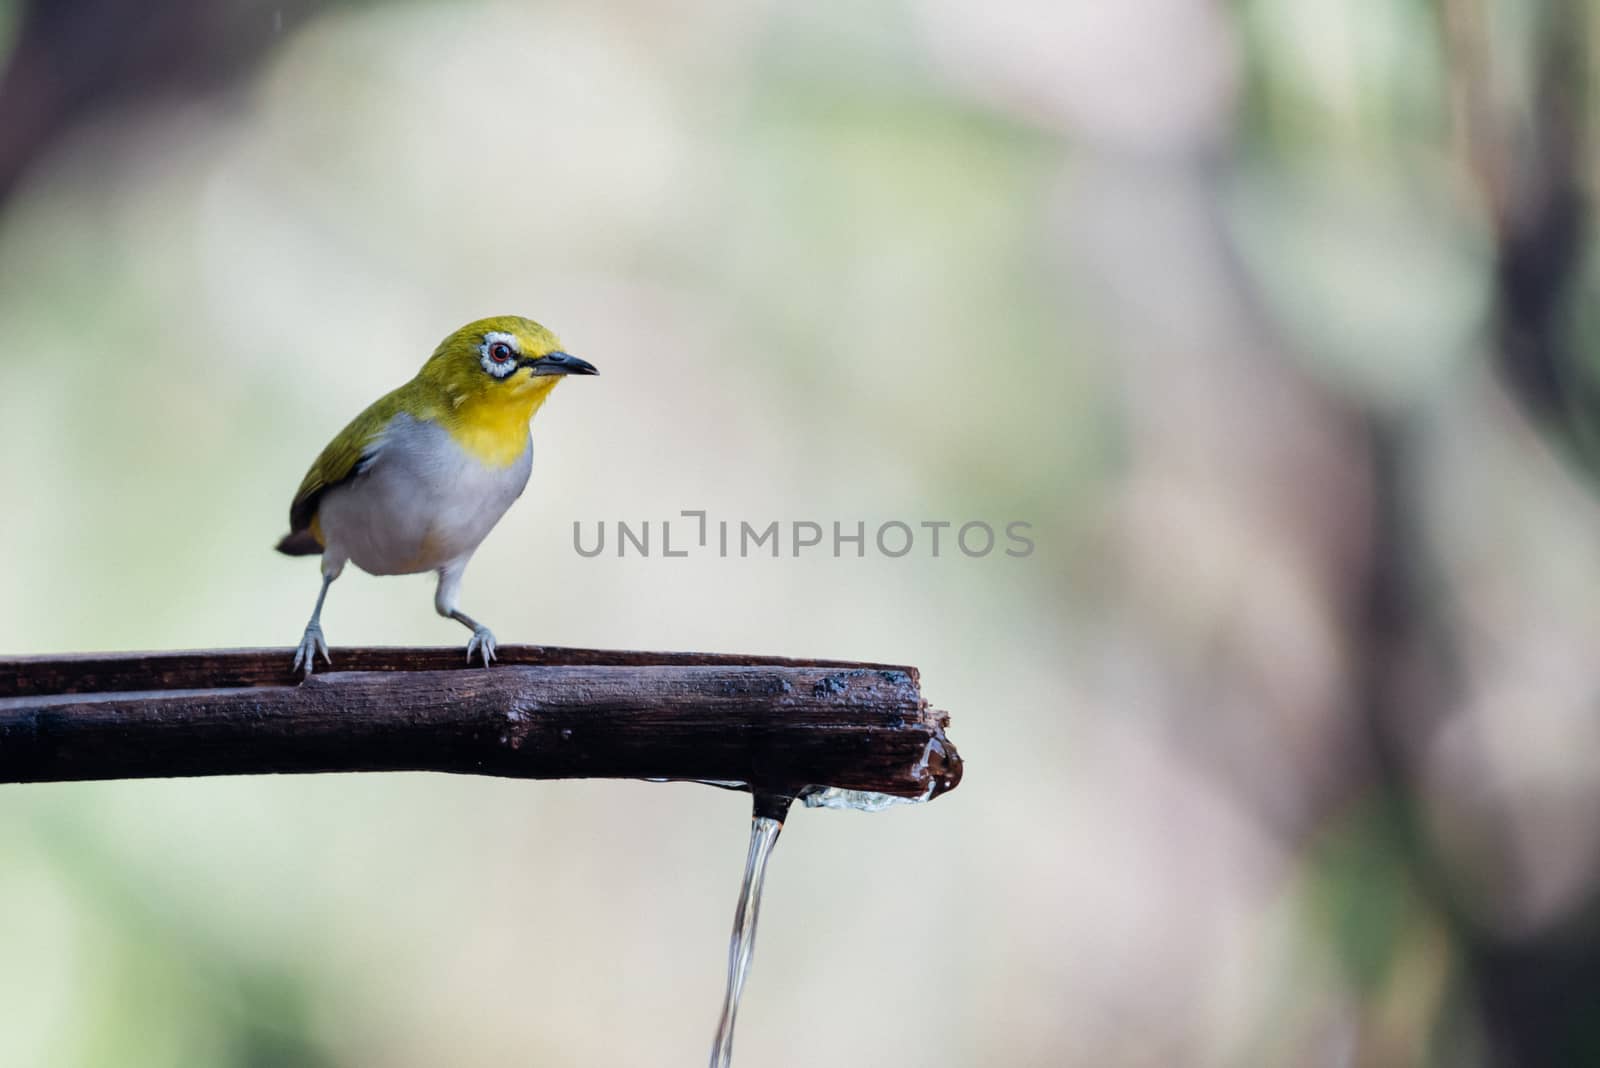 Bird (Swinhoe’s White-eye) in the nature wild by PongMoji